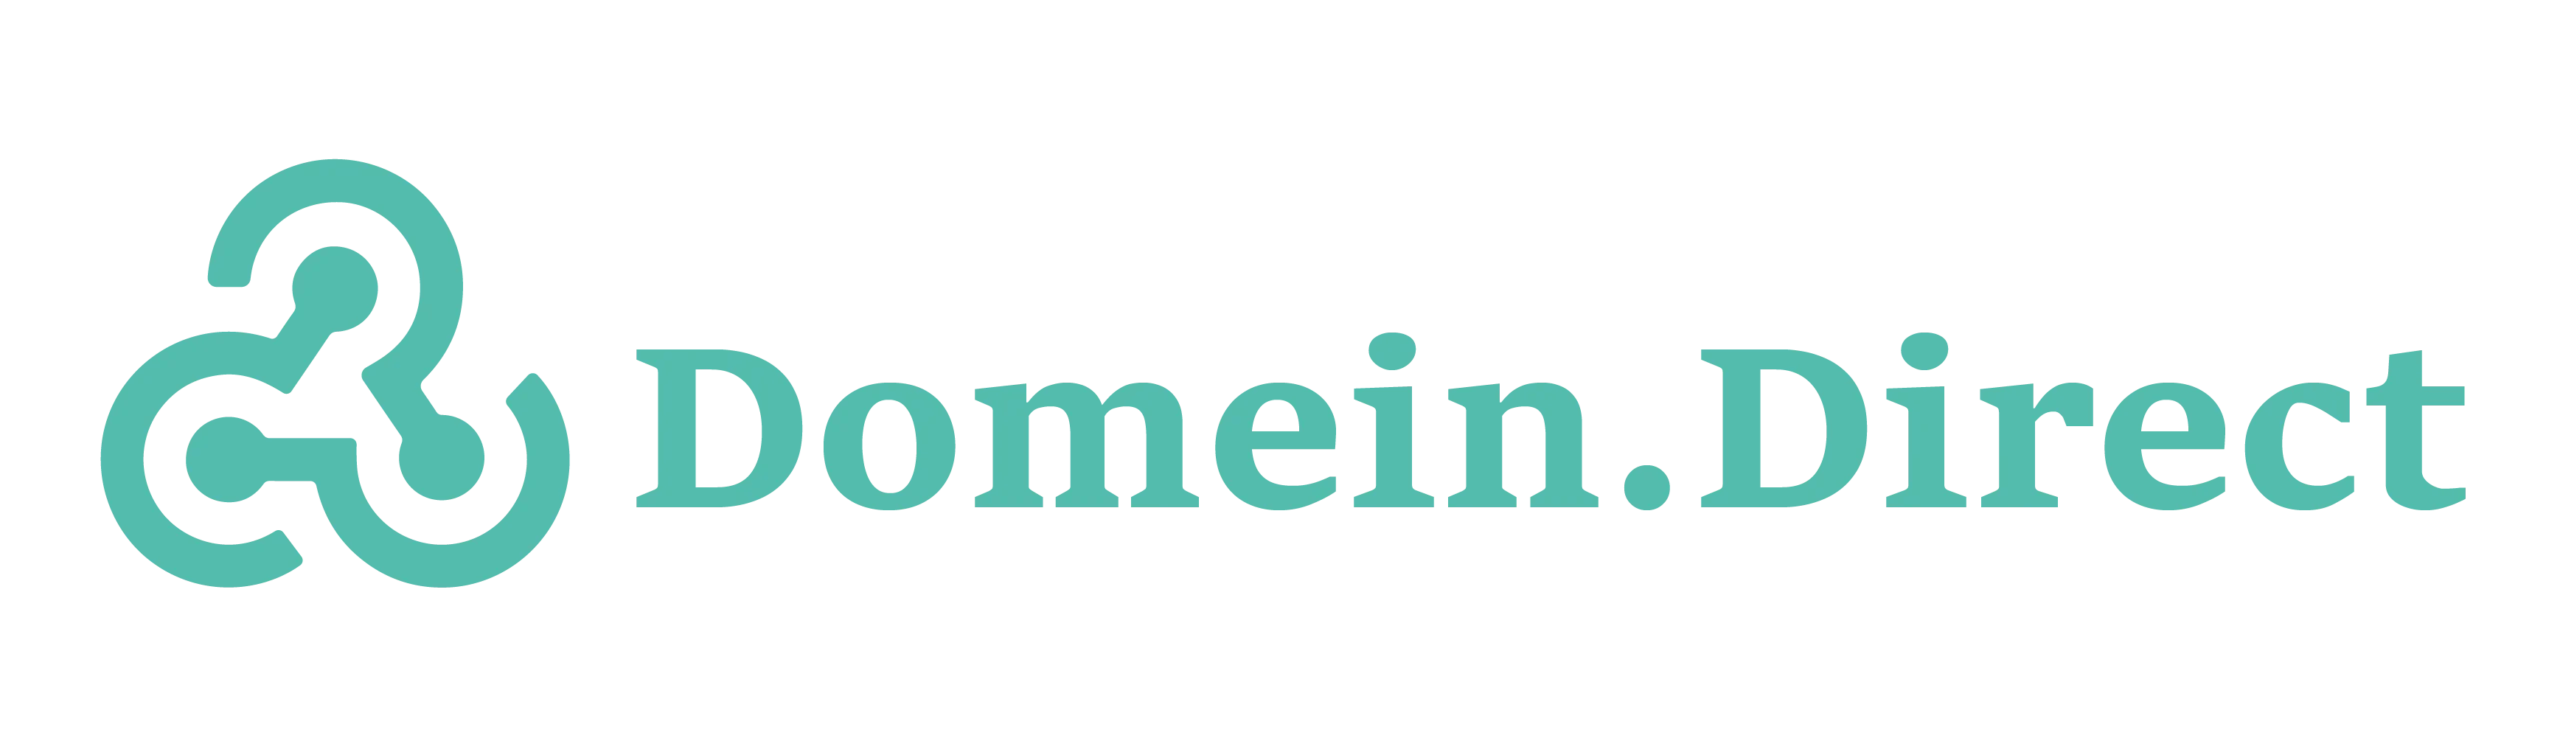 Domein direct logo